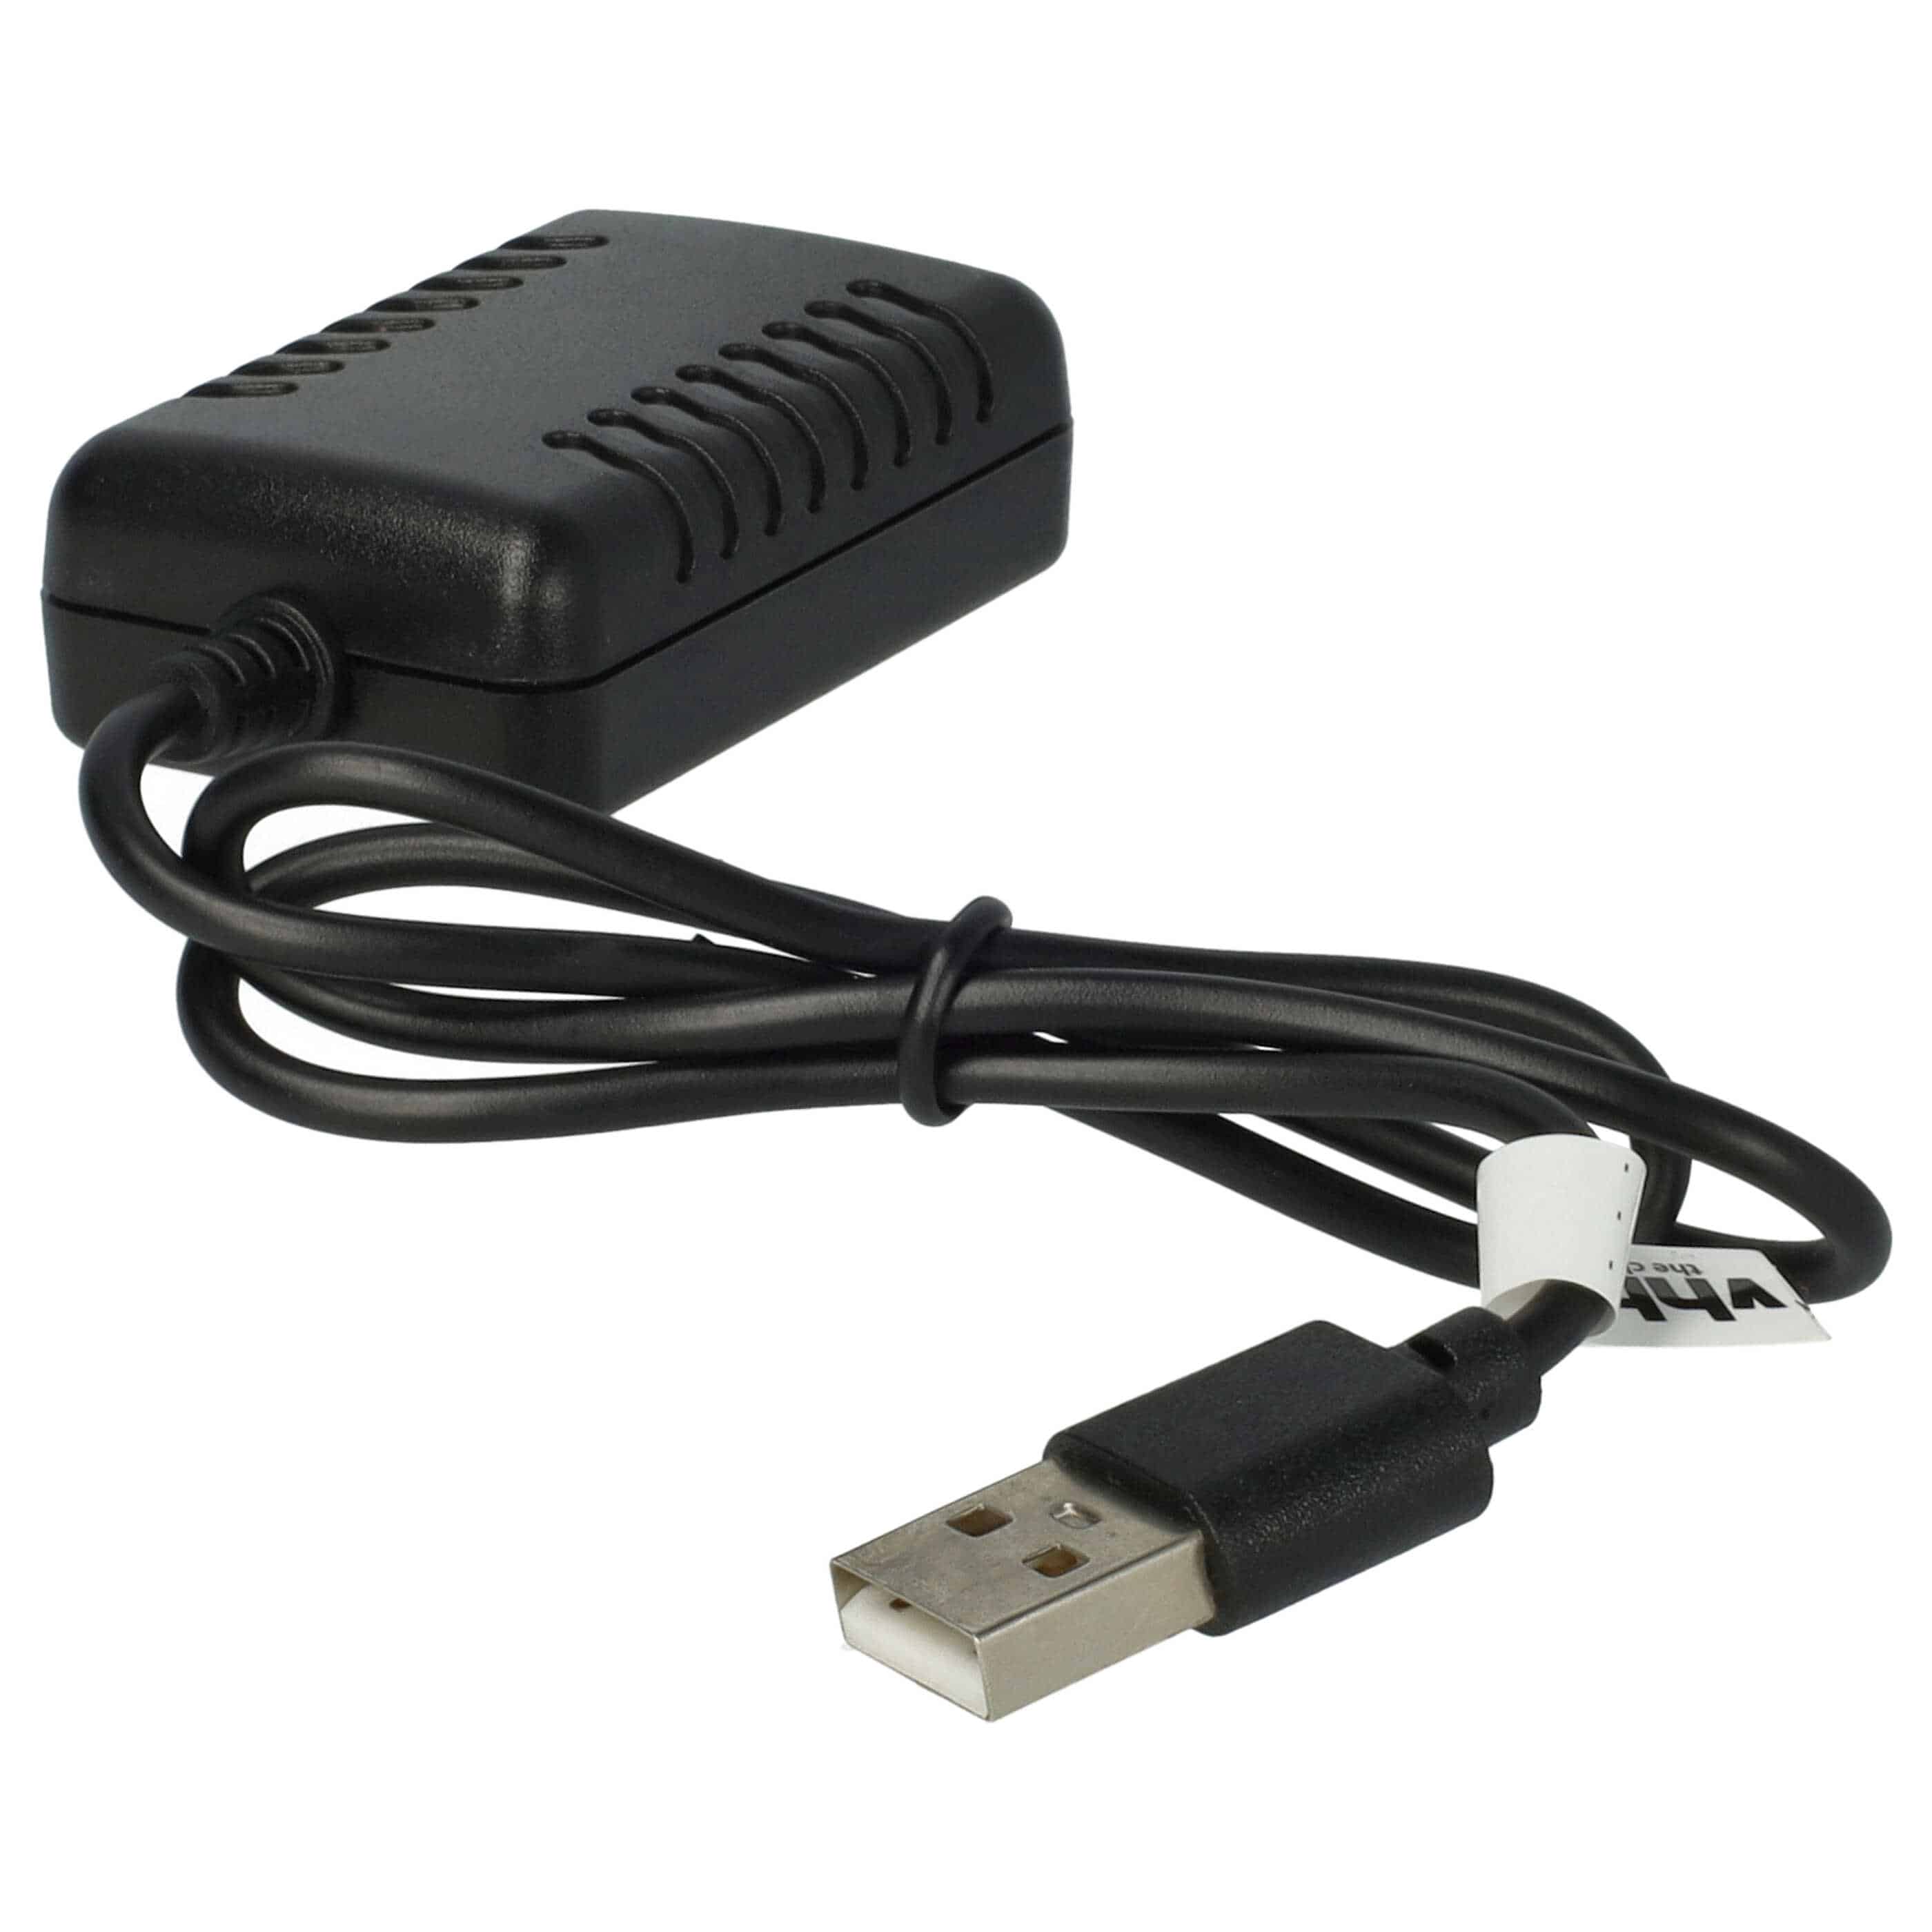 USB-Ladekabel als Ersatz für LJ-0740500E für Wltoys RC-Akkus mit JST XH-3P-Anschluss - 55cm 7.4V, 2A